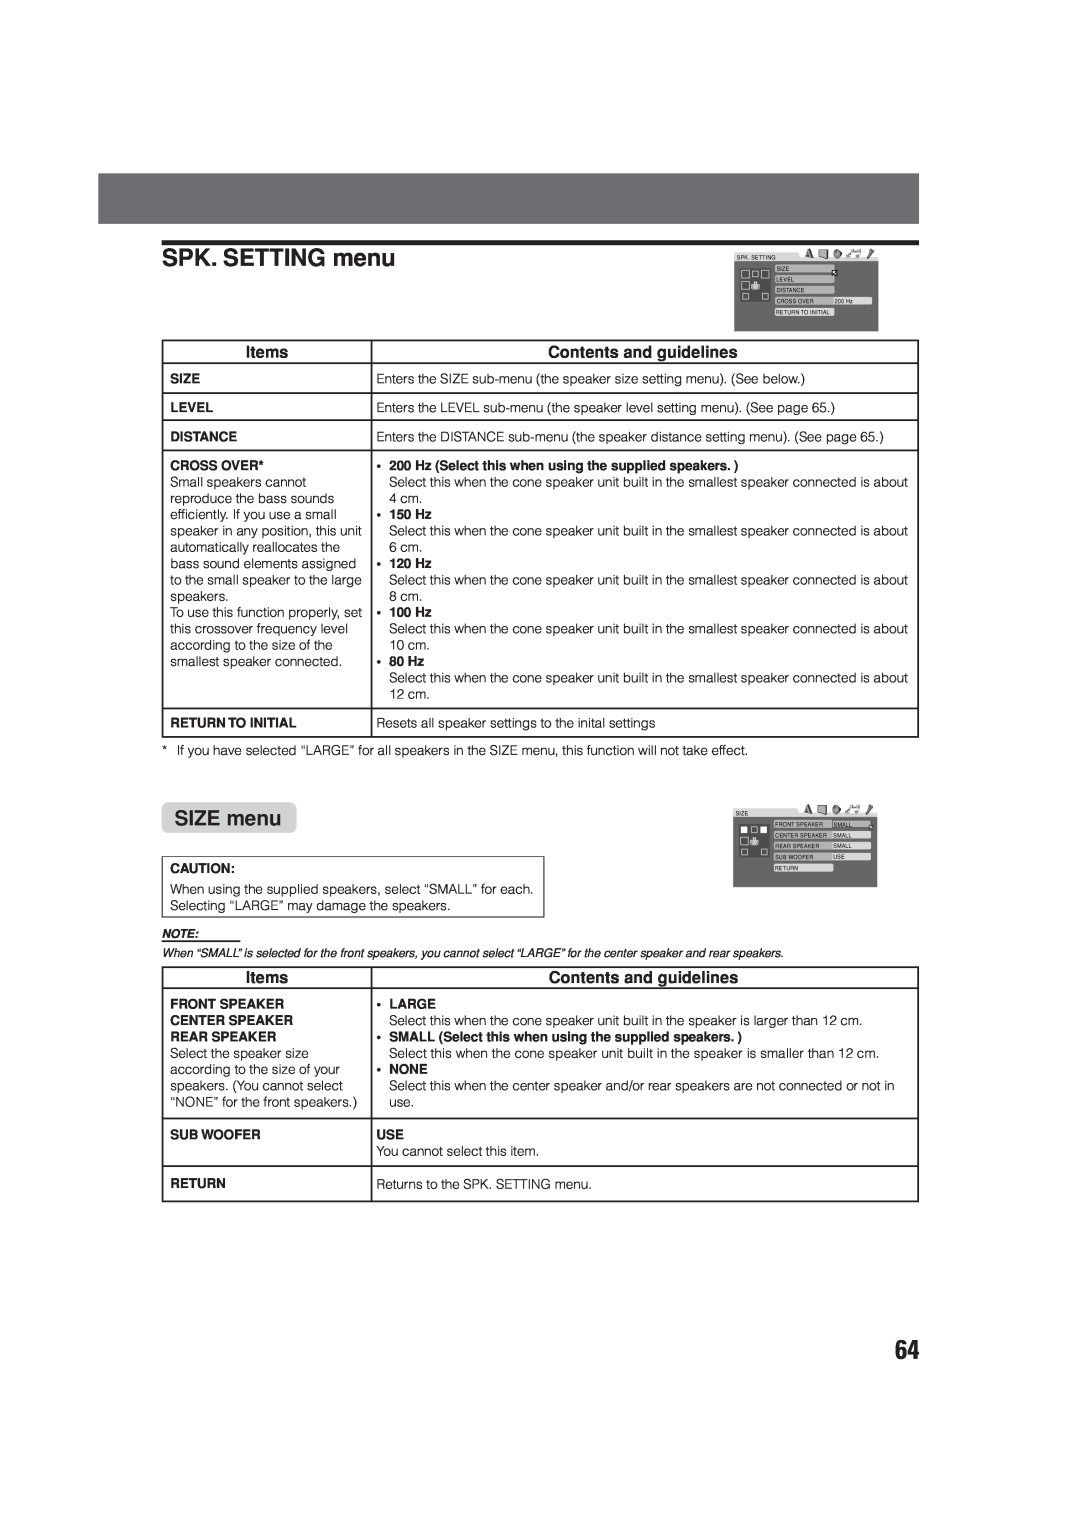 JVC XV-THV70R, LVT0865-004A, SP-XCV70 manual SPK. SETTING menu, SIZE menu, Items, Contents and guidelines 